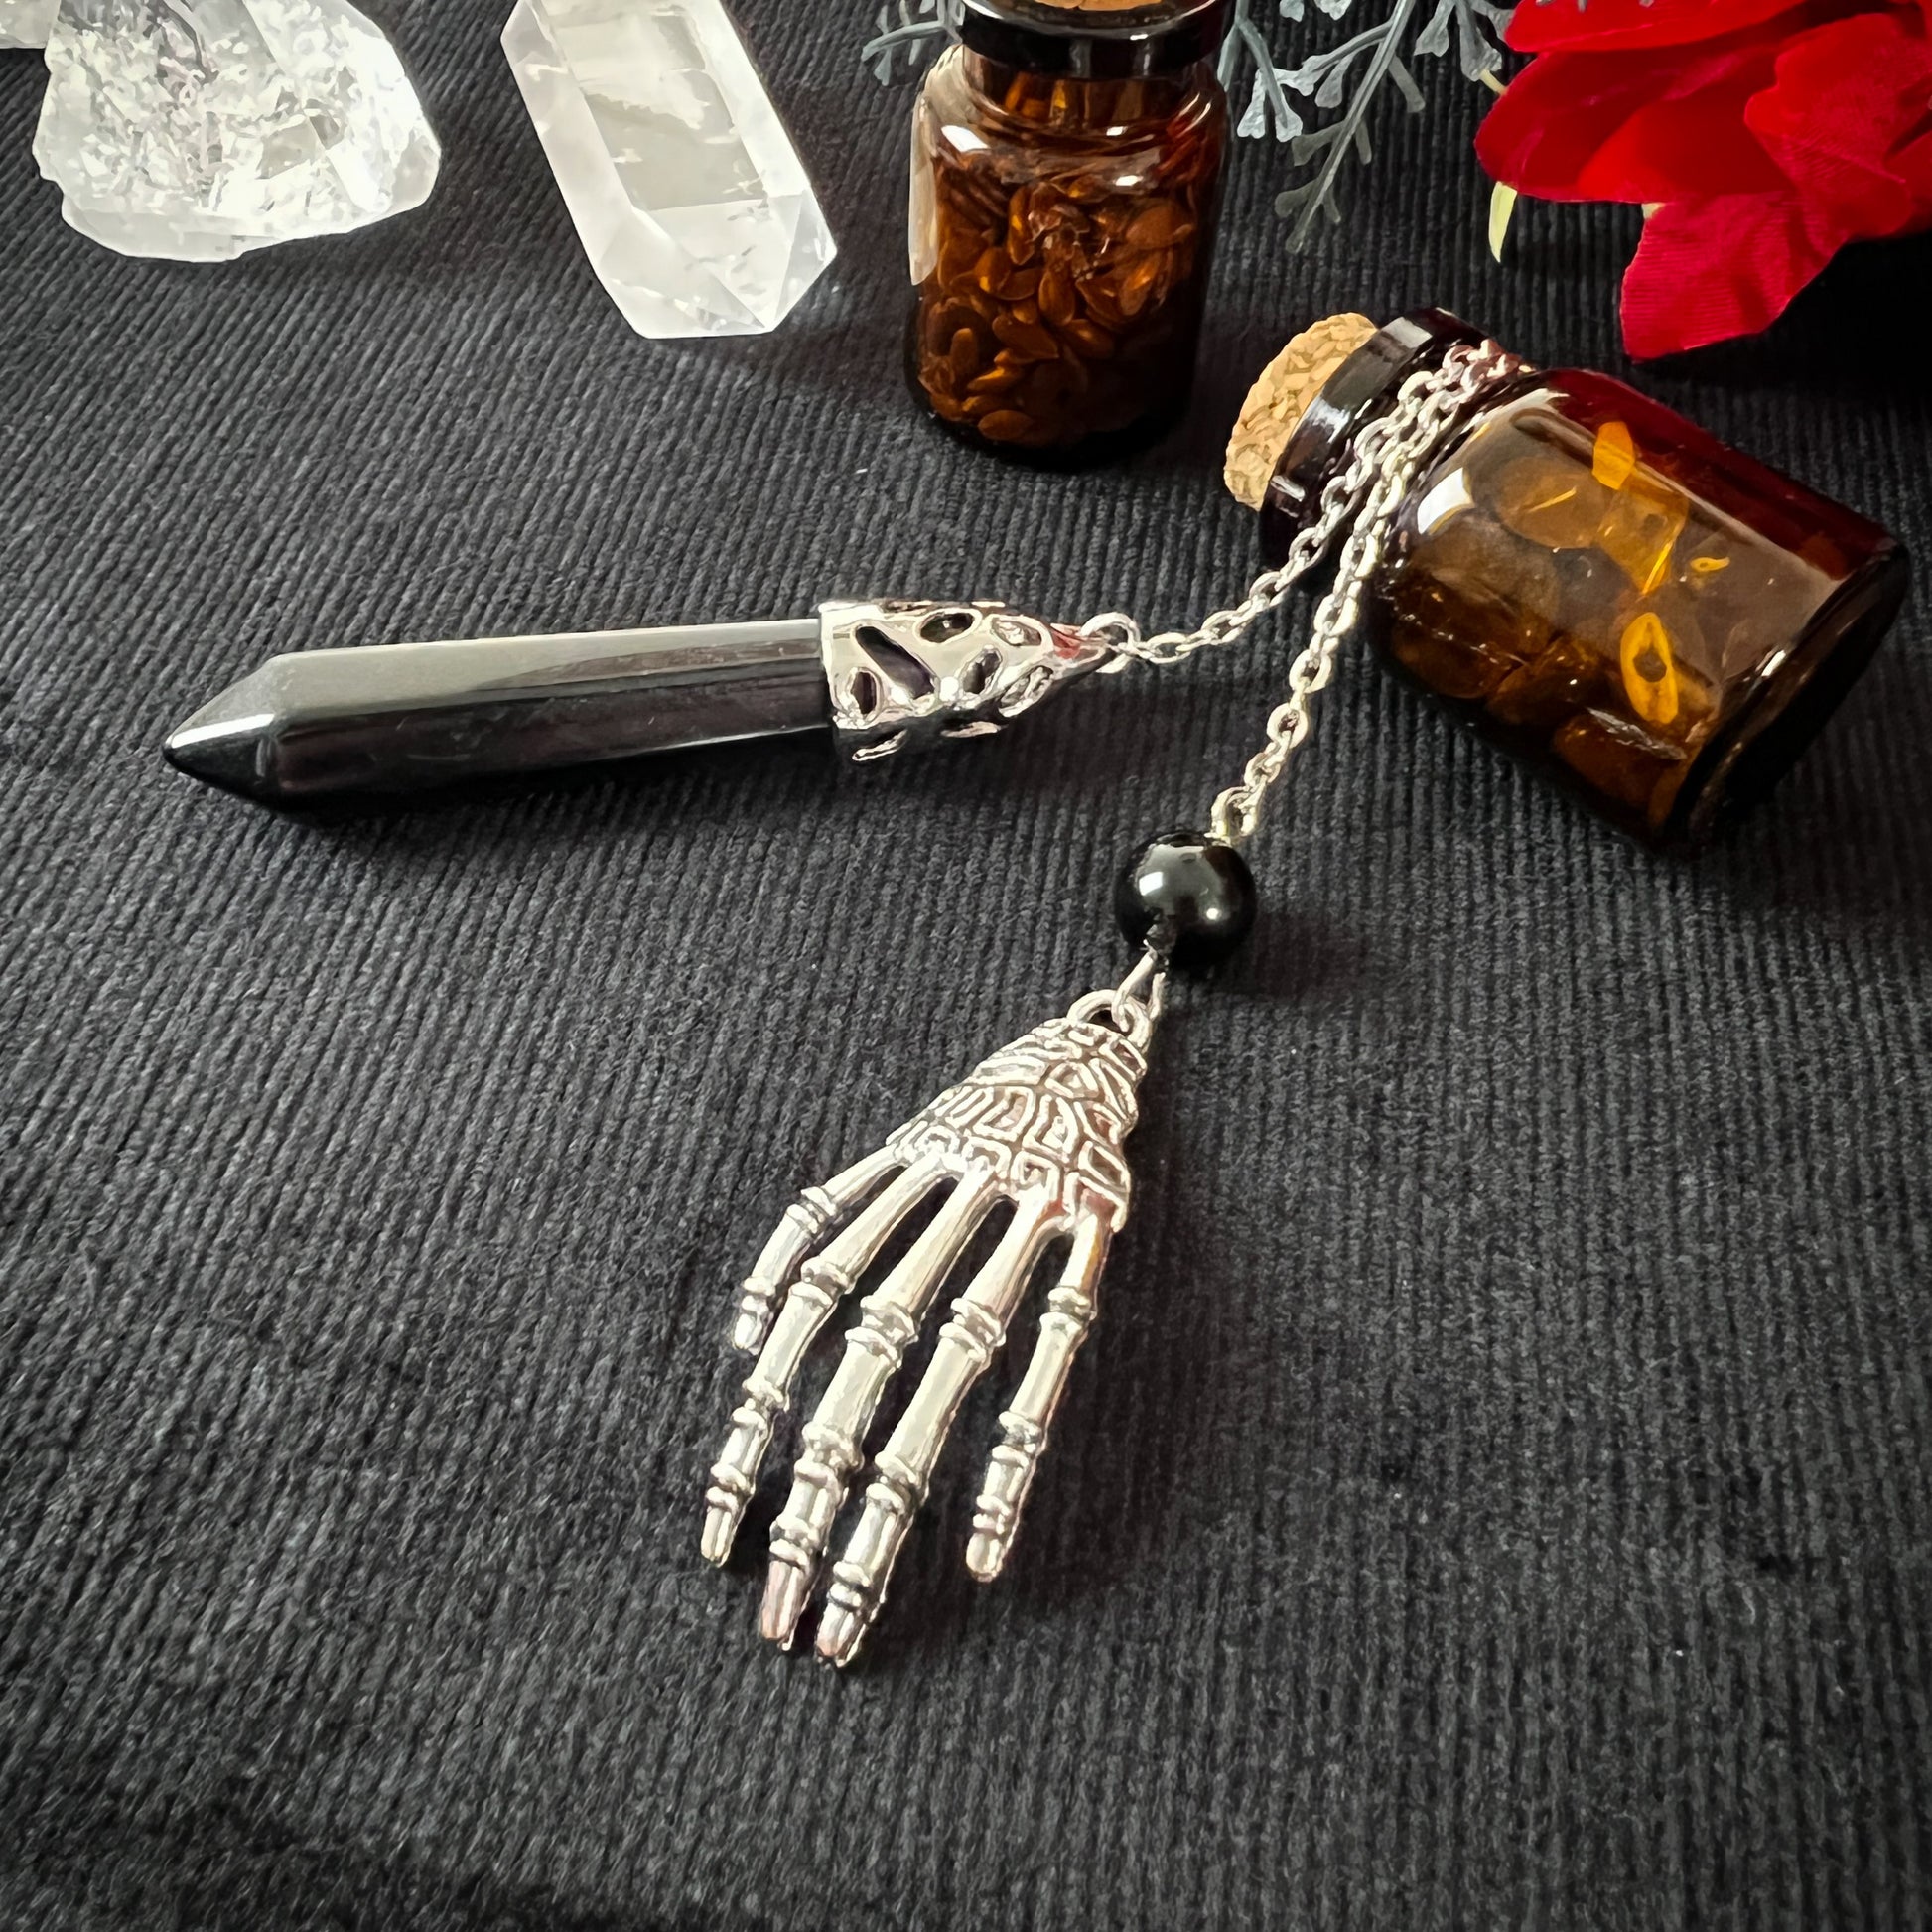 Onyx and skeleton hand dowsing pendulum Baguette Magick